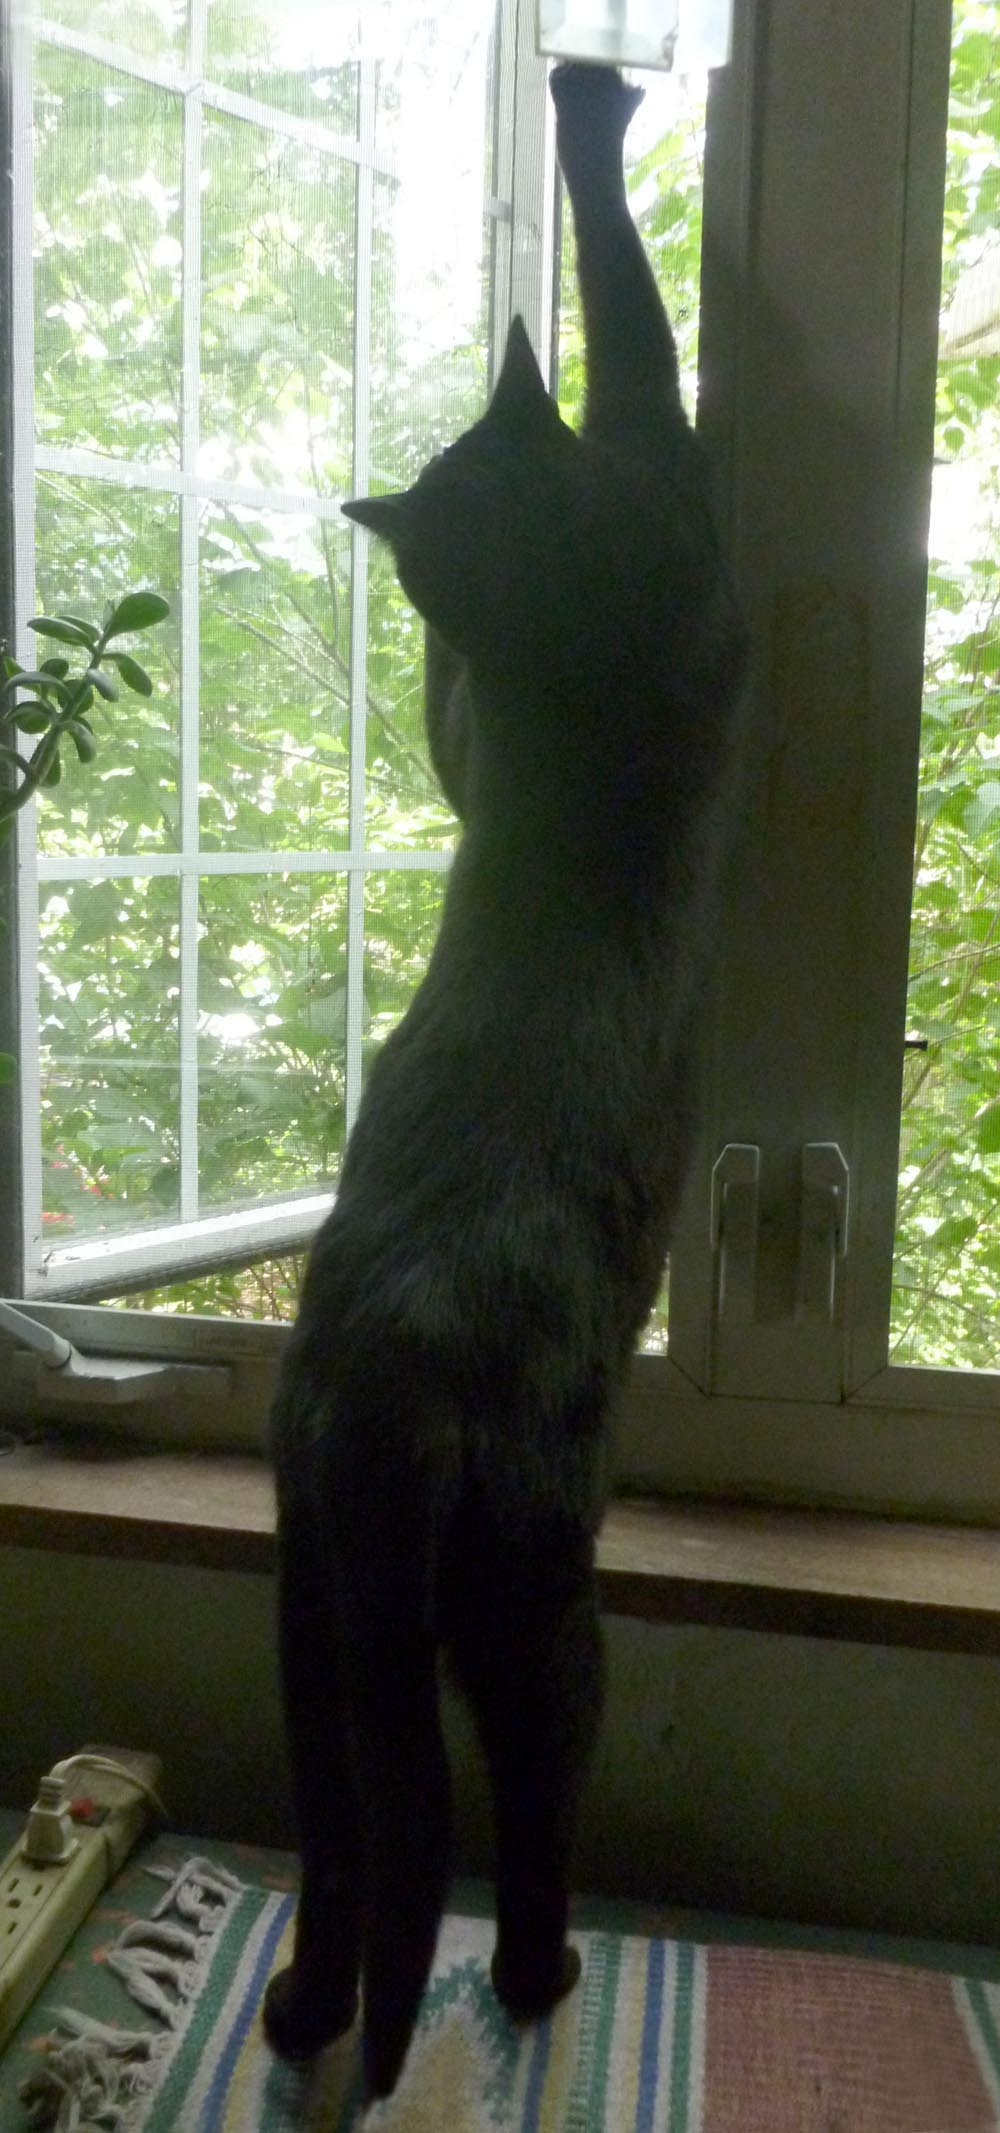 black cat stretching on window